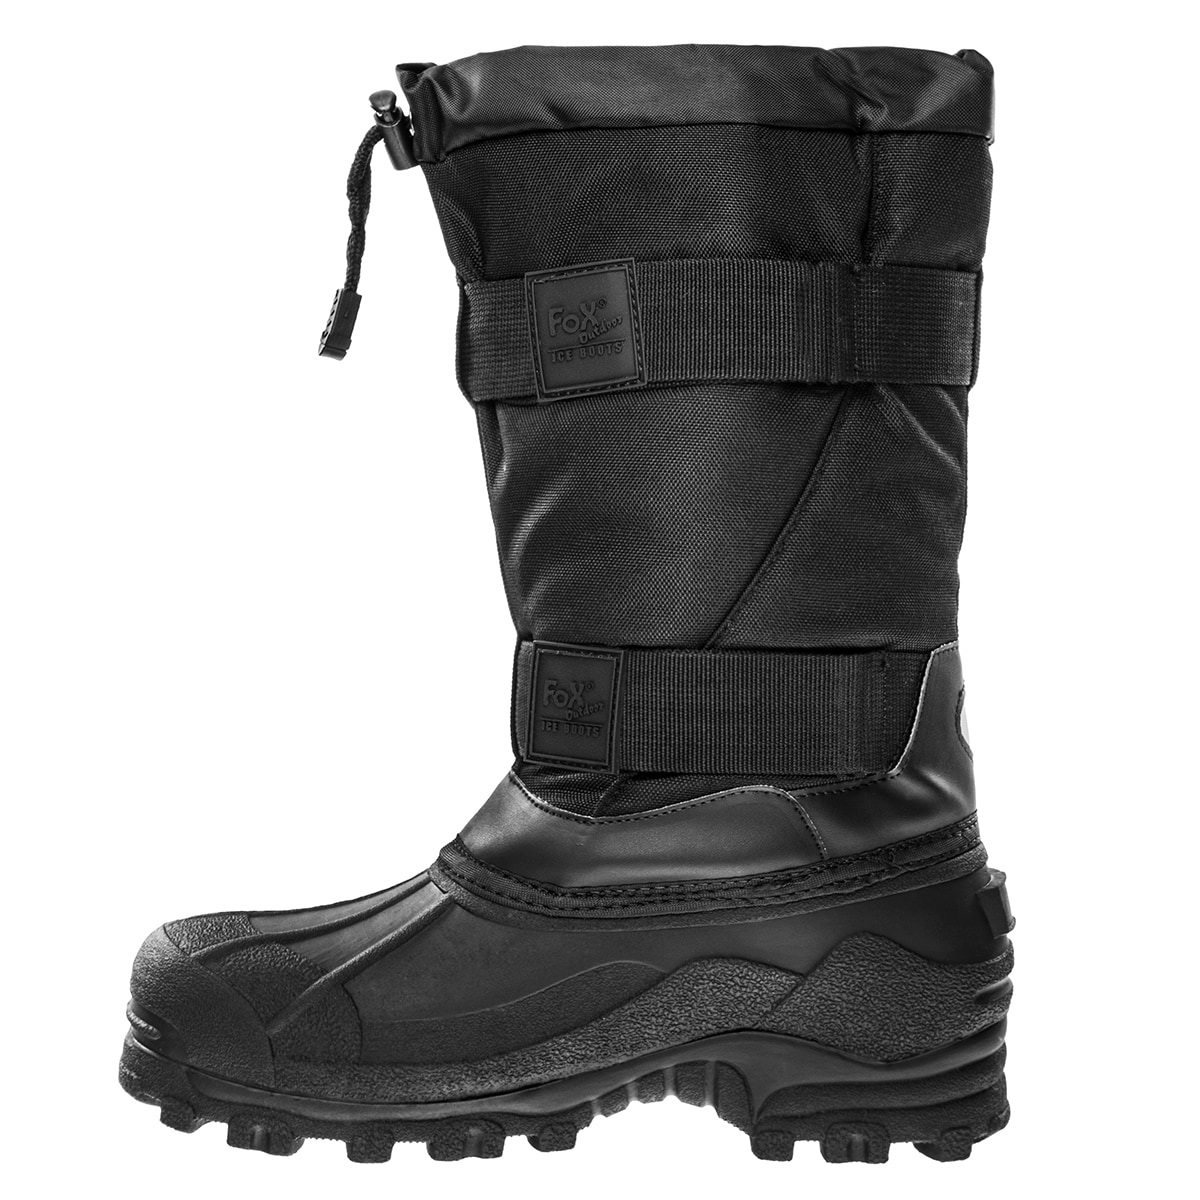 Buty śniegowce MFH Fox Outdoor Thermo Boots Fox -40 st. - Black